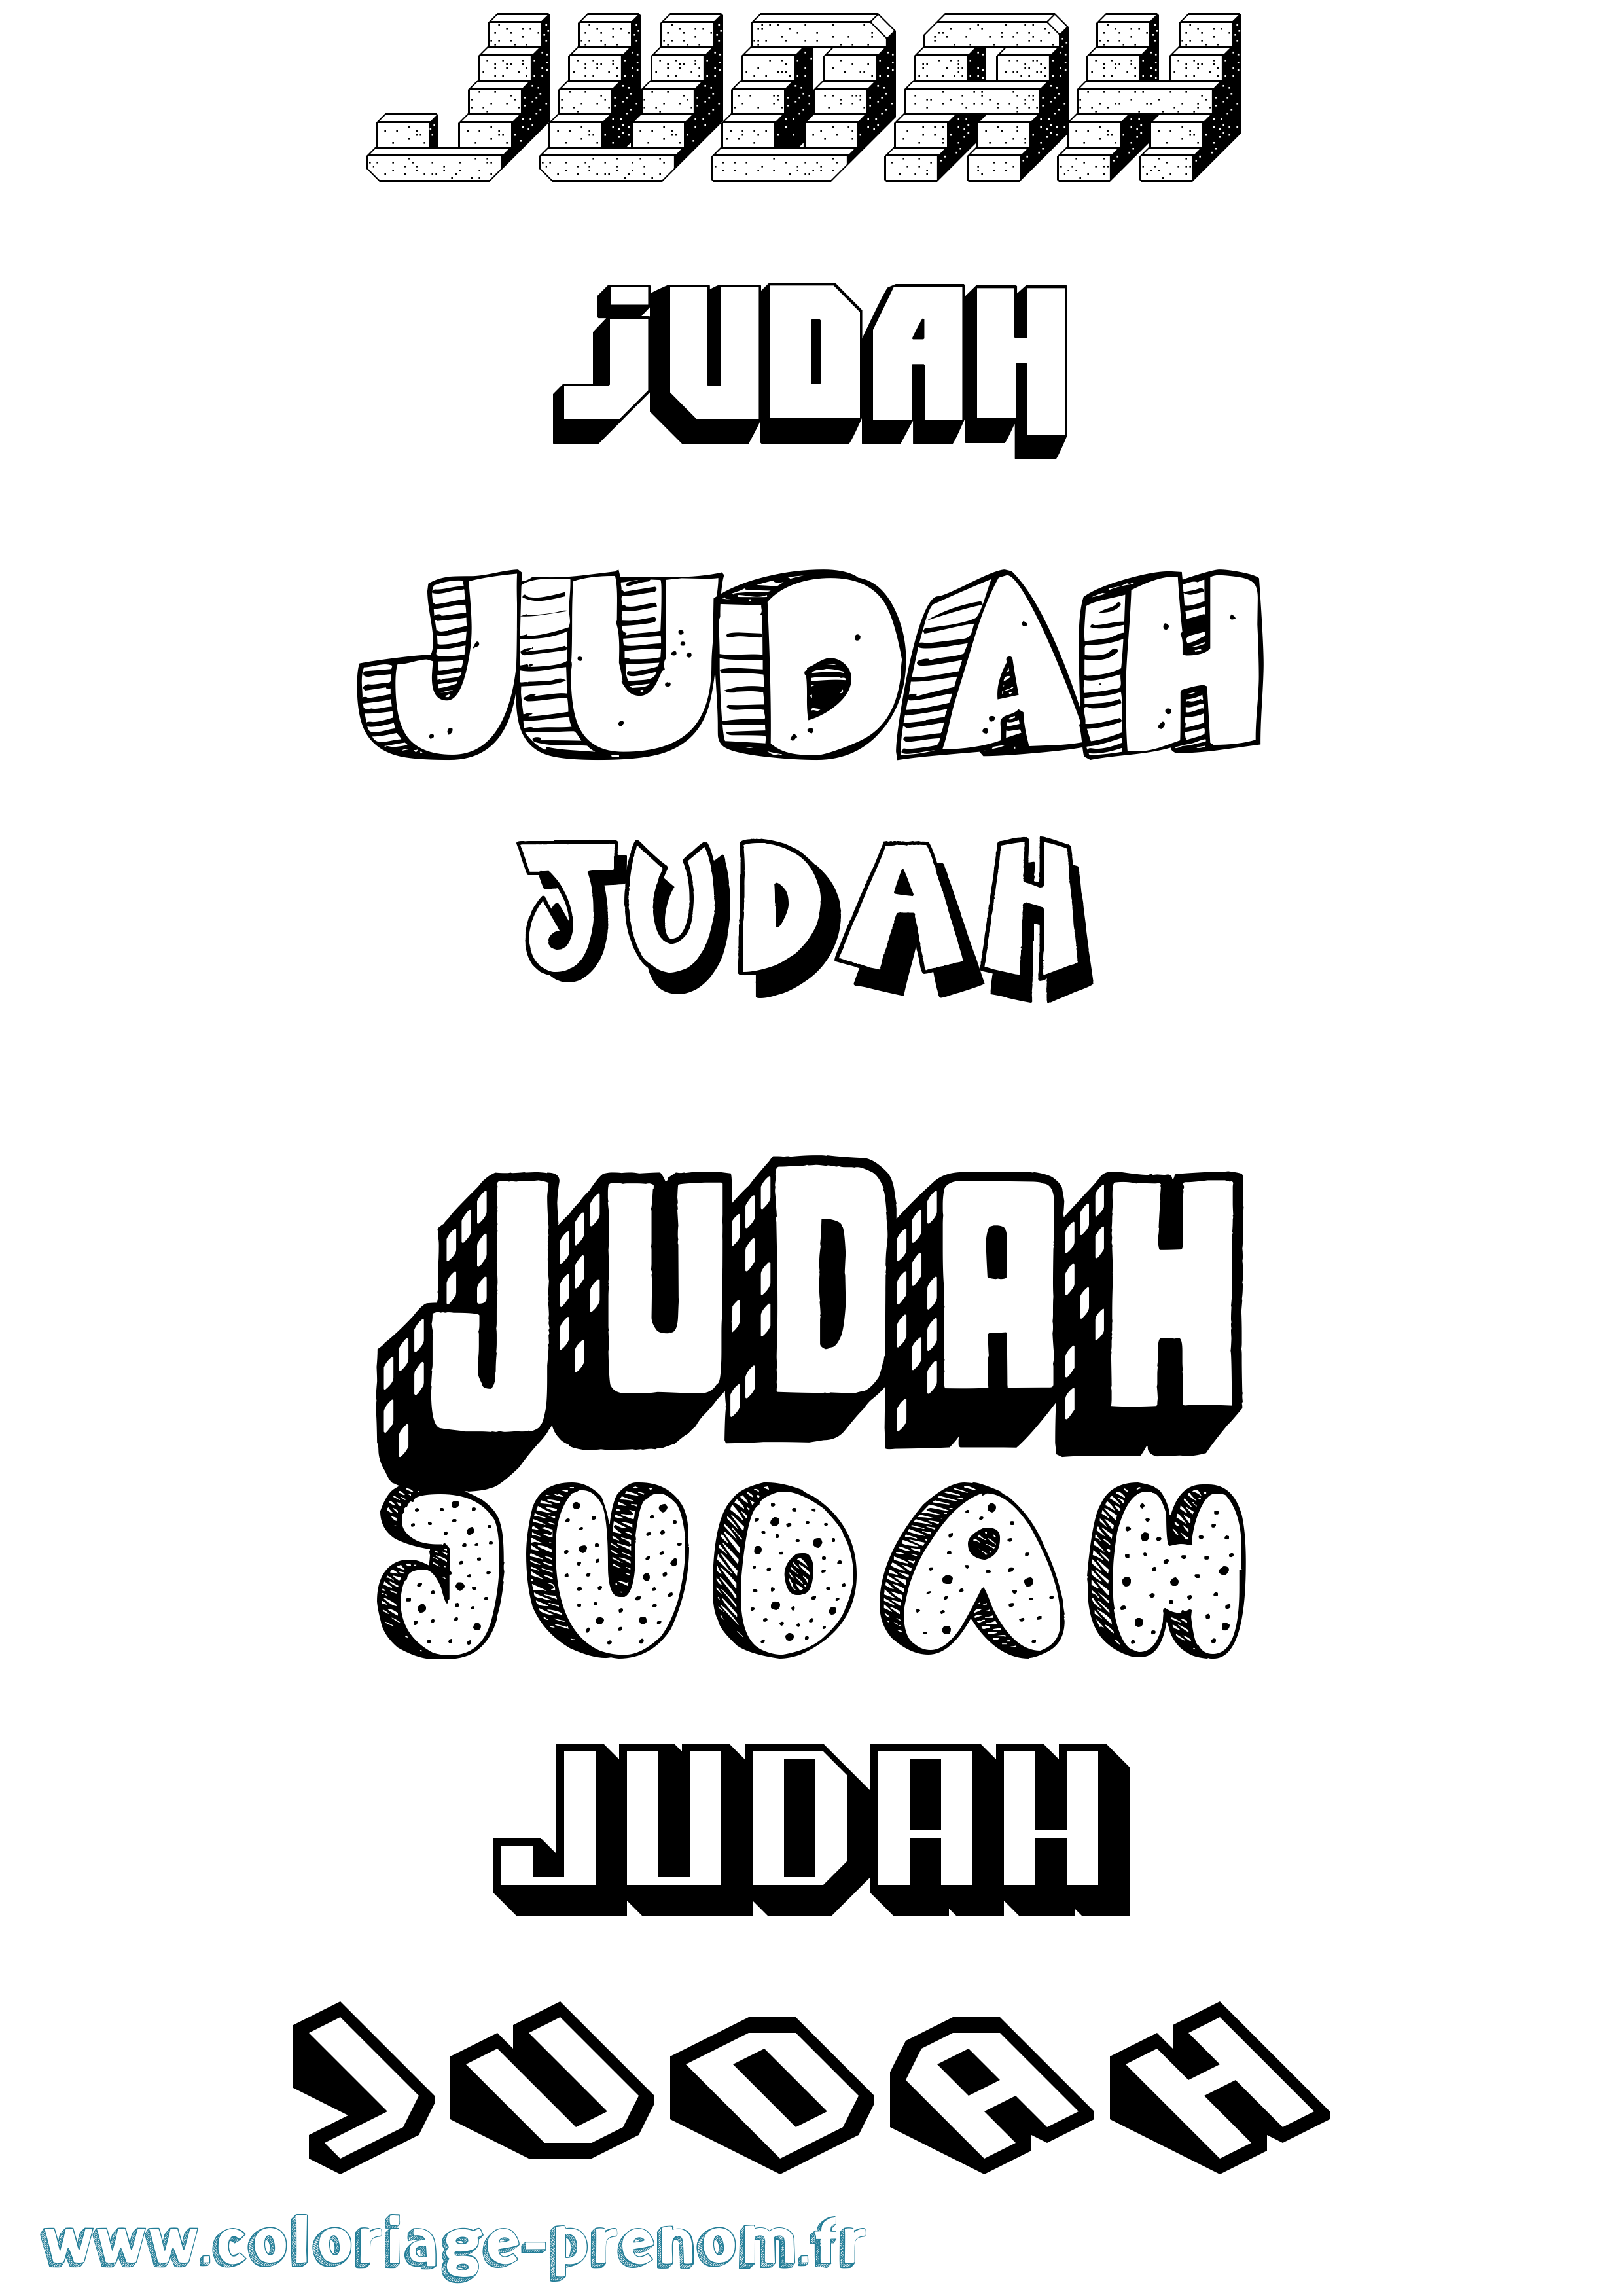 Coloriage prénom Judah Effet 3D